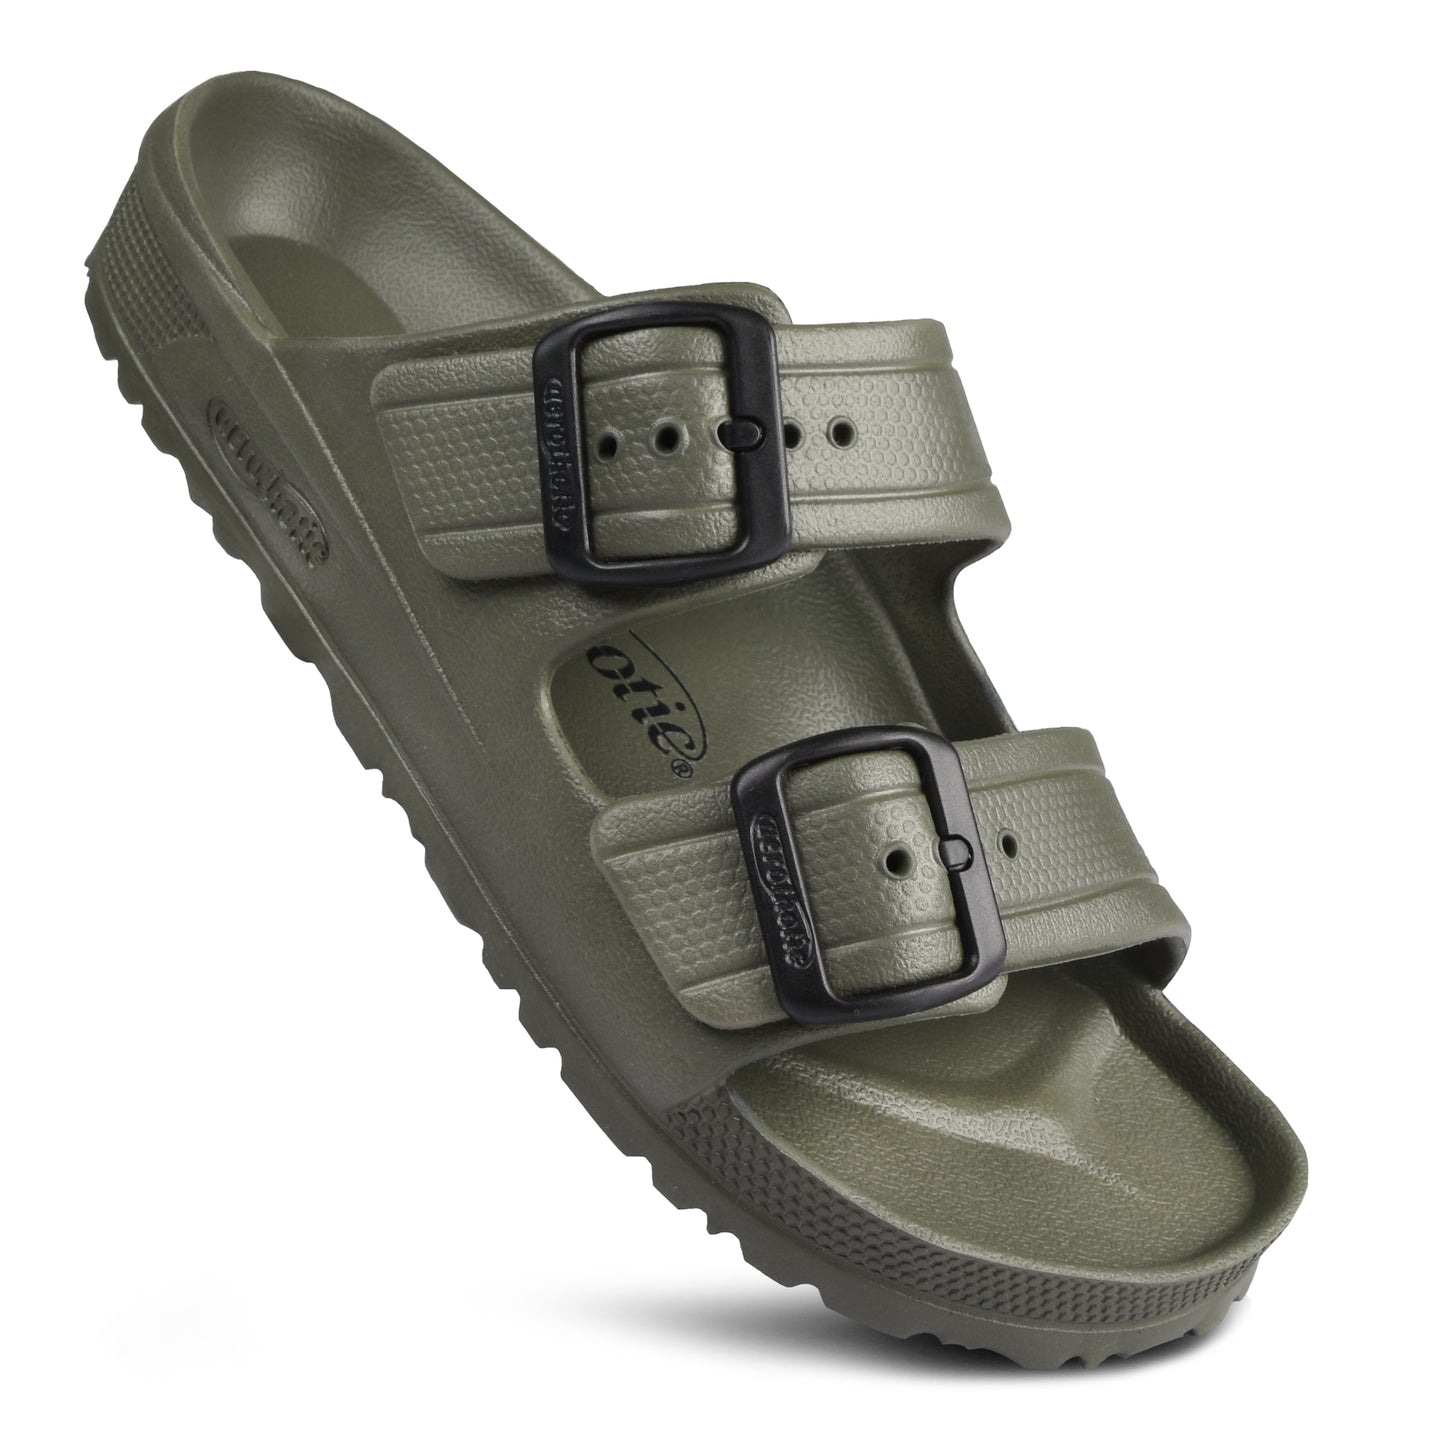 Water-friendly Lightweight Eva Rubber Sandals